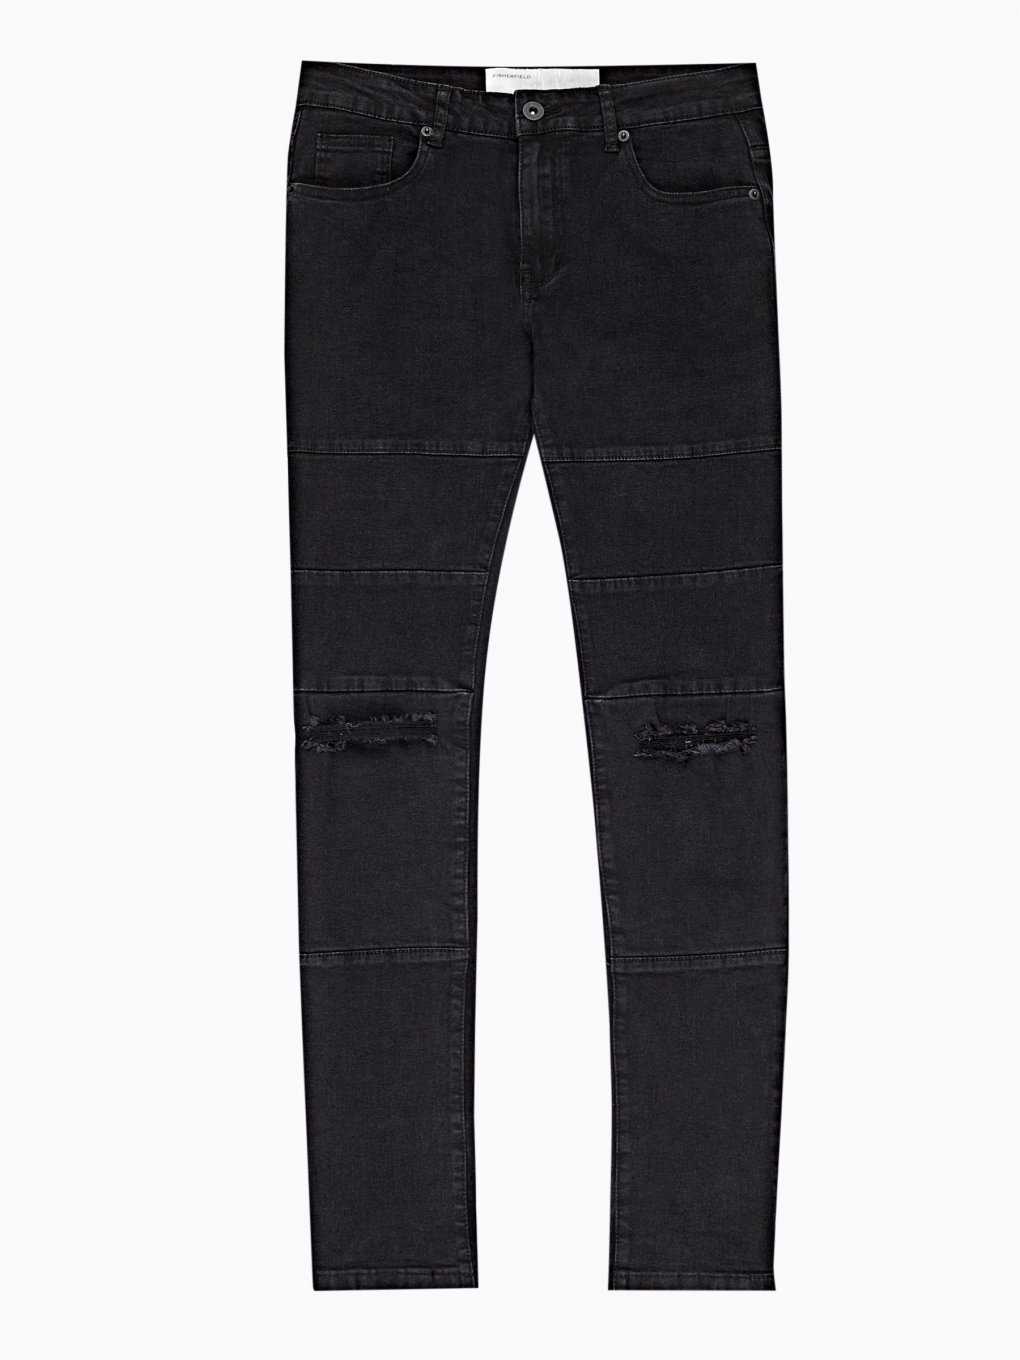 Destroyed straight slim fit jeans in black wash